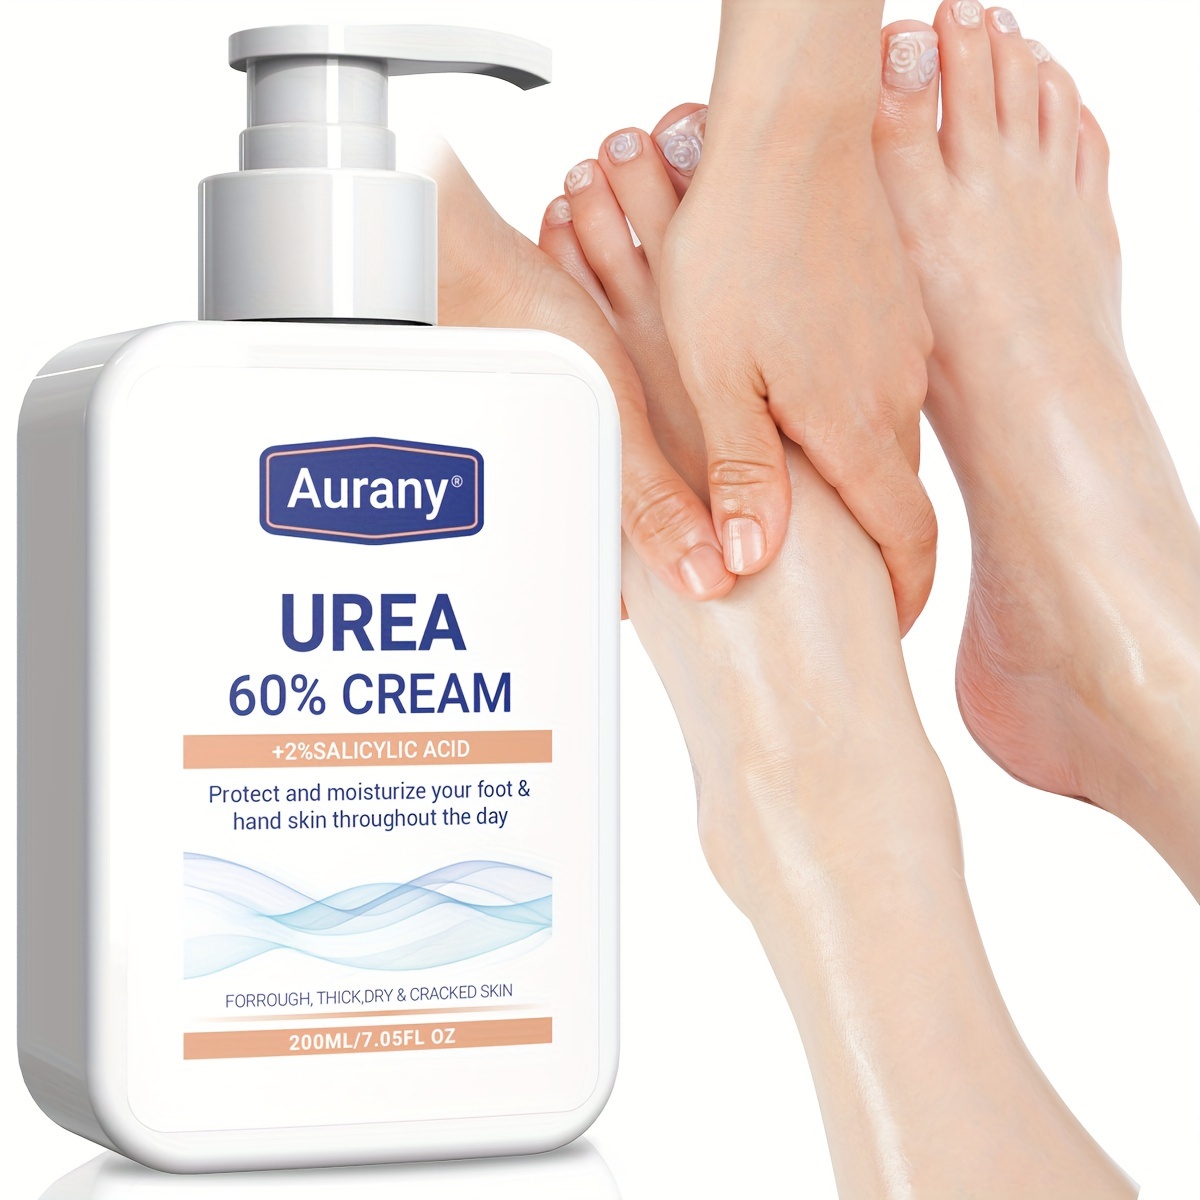 

Aurany 60% Urea Foot & Hand Cream With 2% Salicylic Acid - Intensive Moisturizer For Rough, Cracked Skin, 7.05 Fl Oz | -free, Softens & Protects Urea Foot Cream